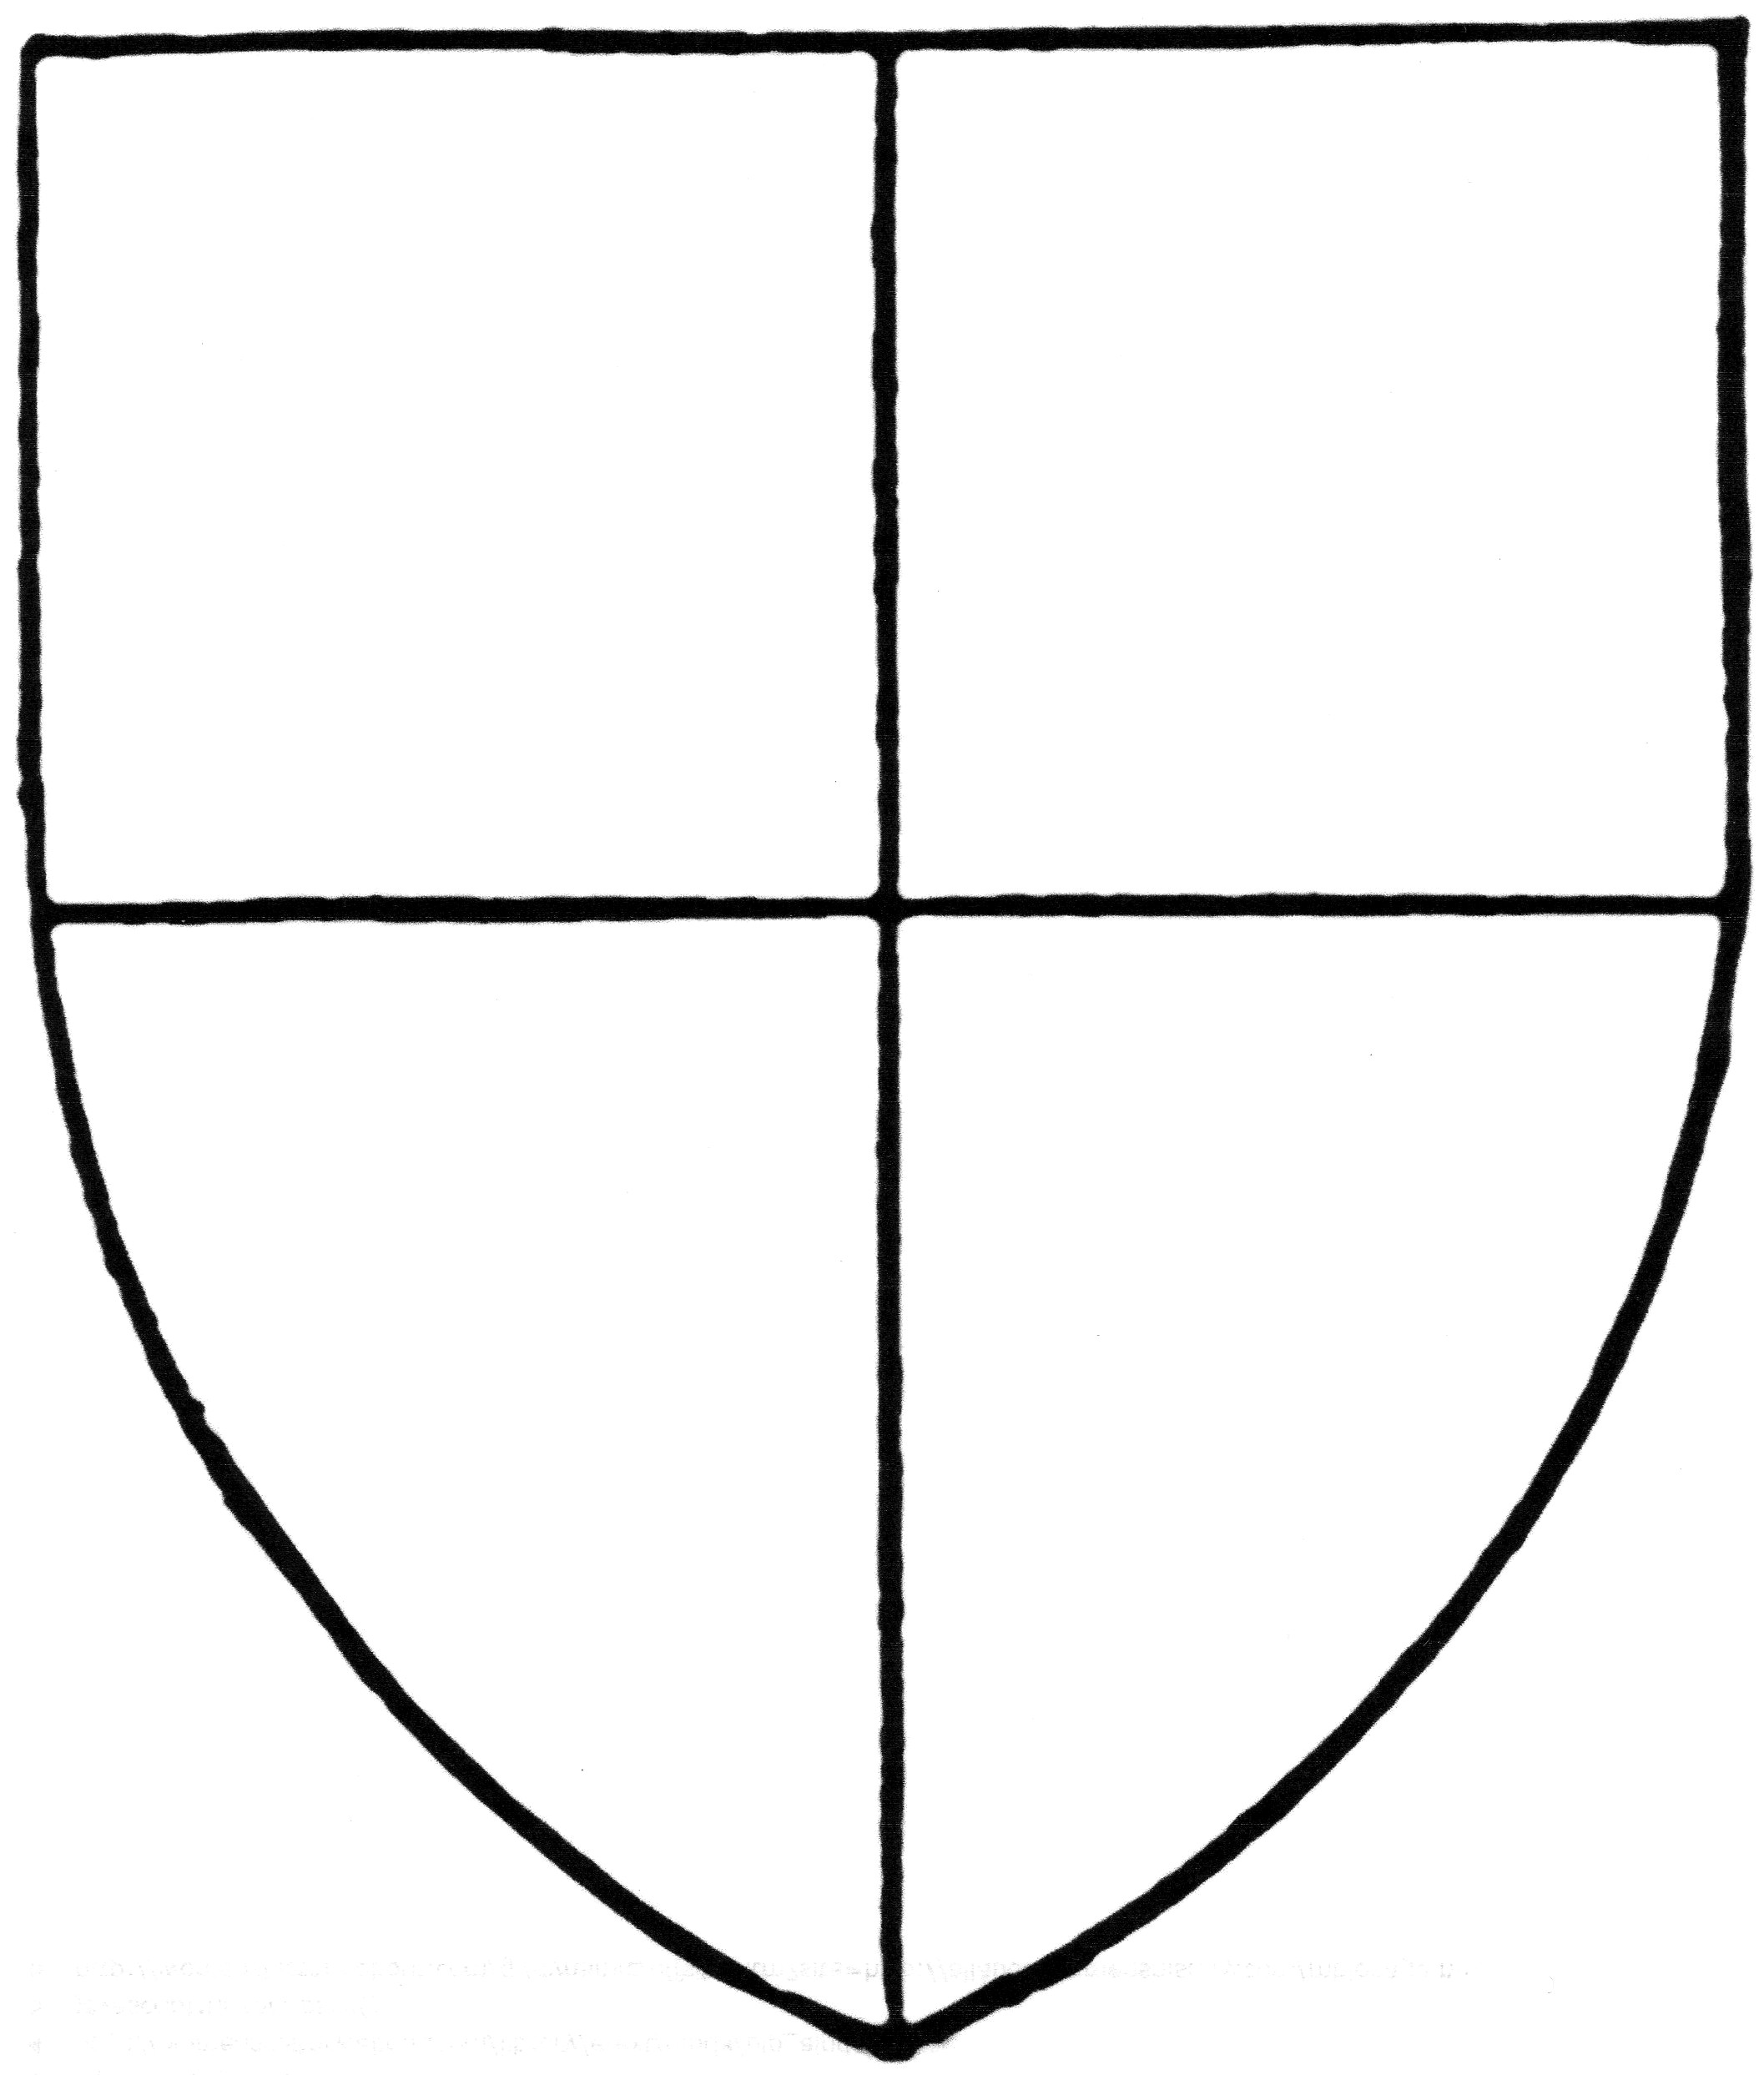 coat-of-arms-symbols-printable